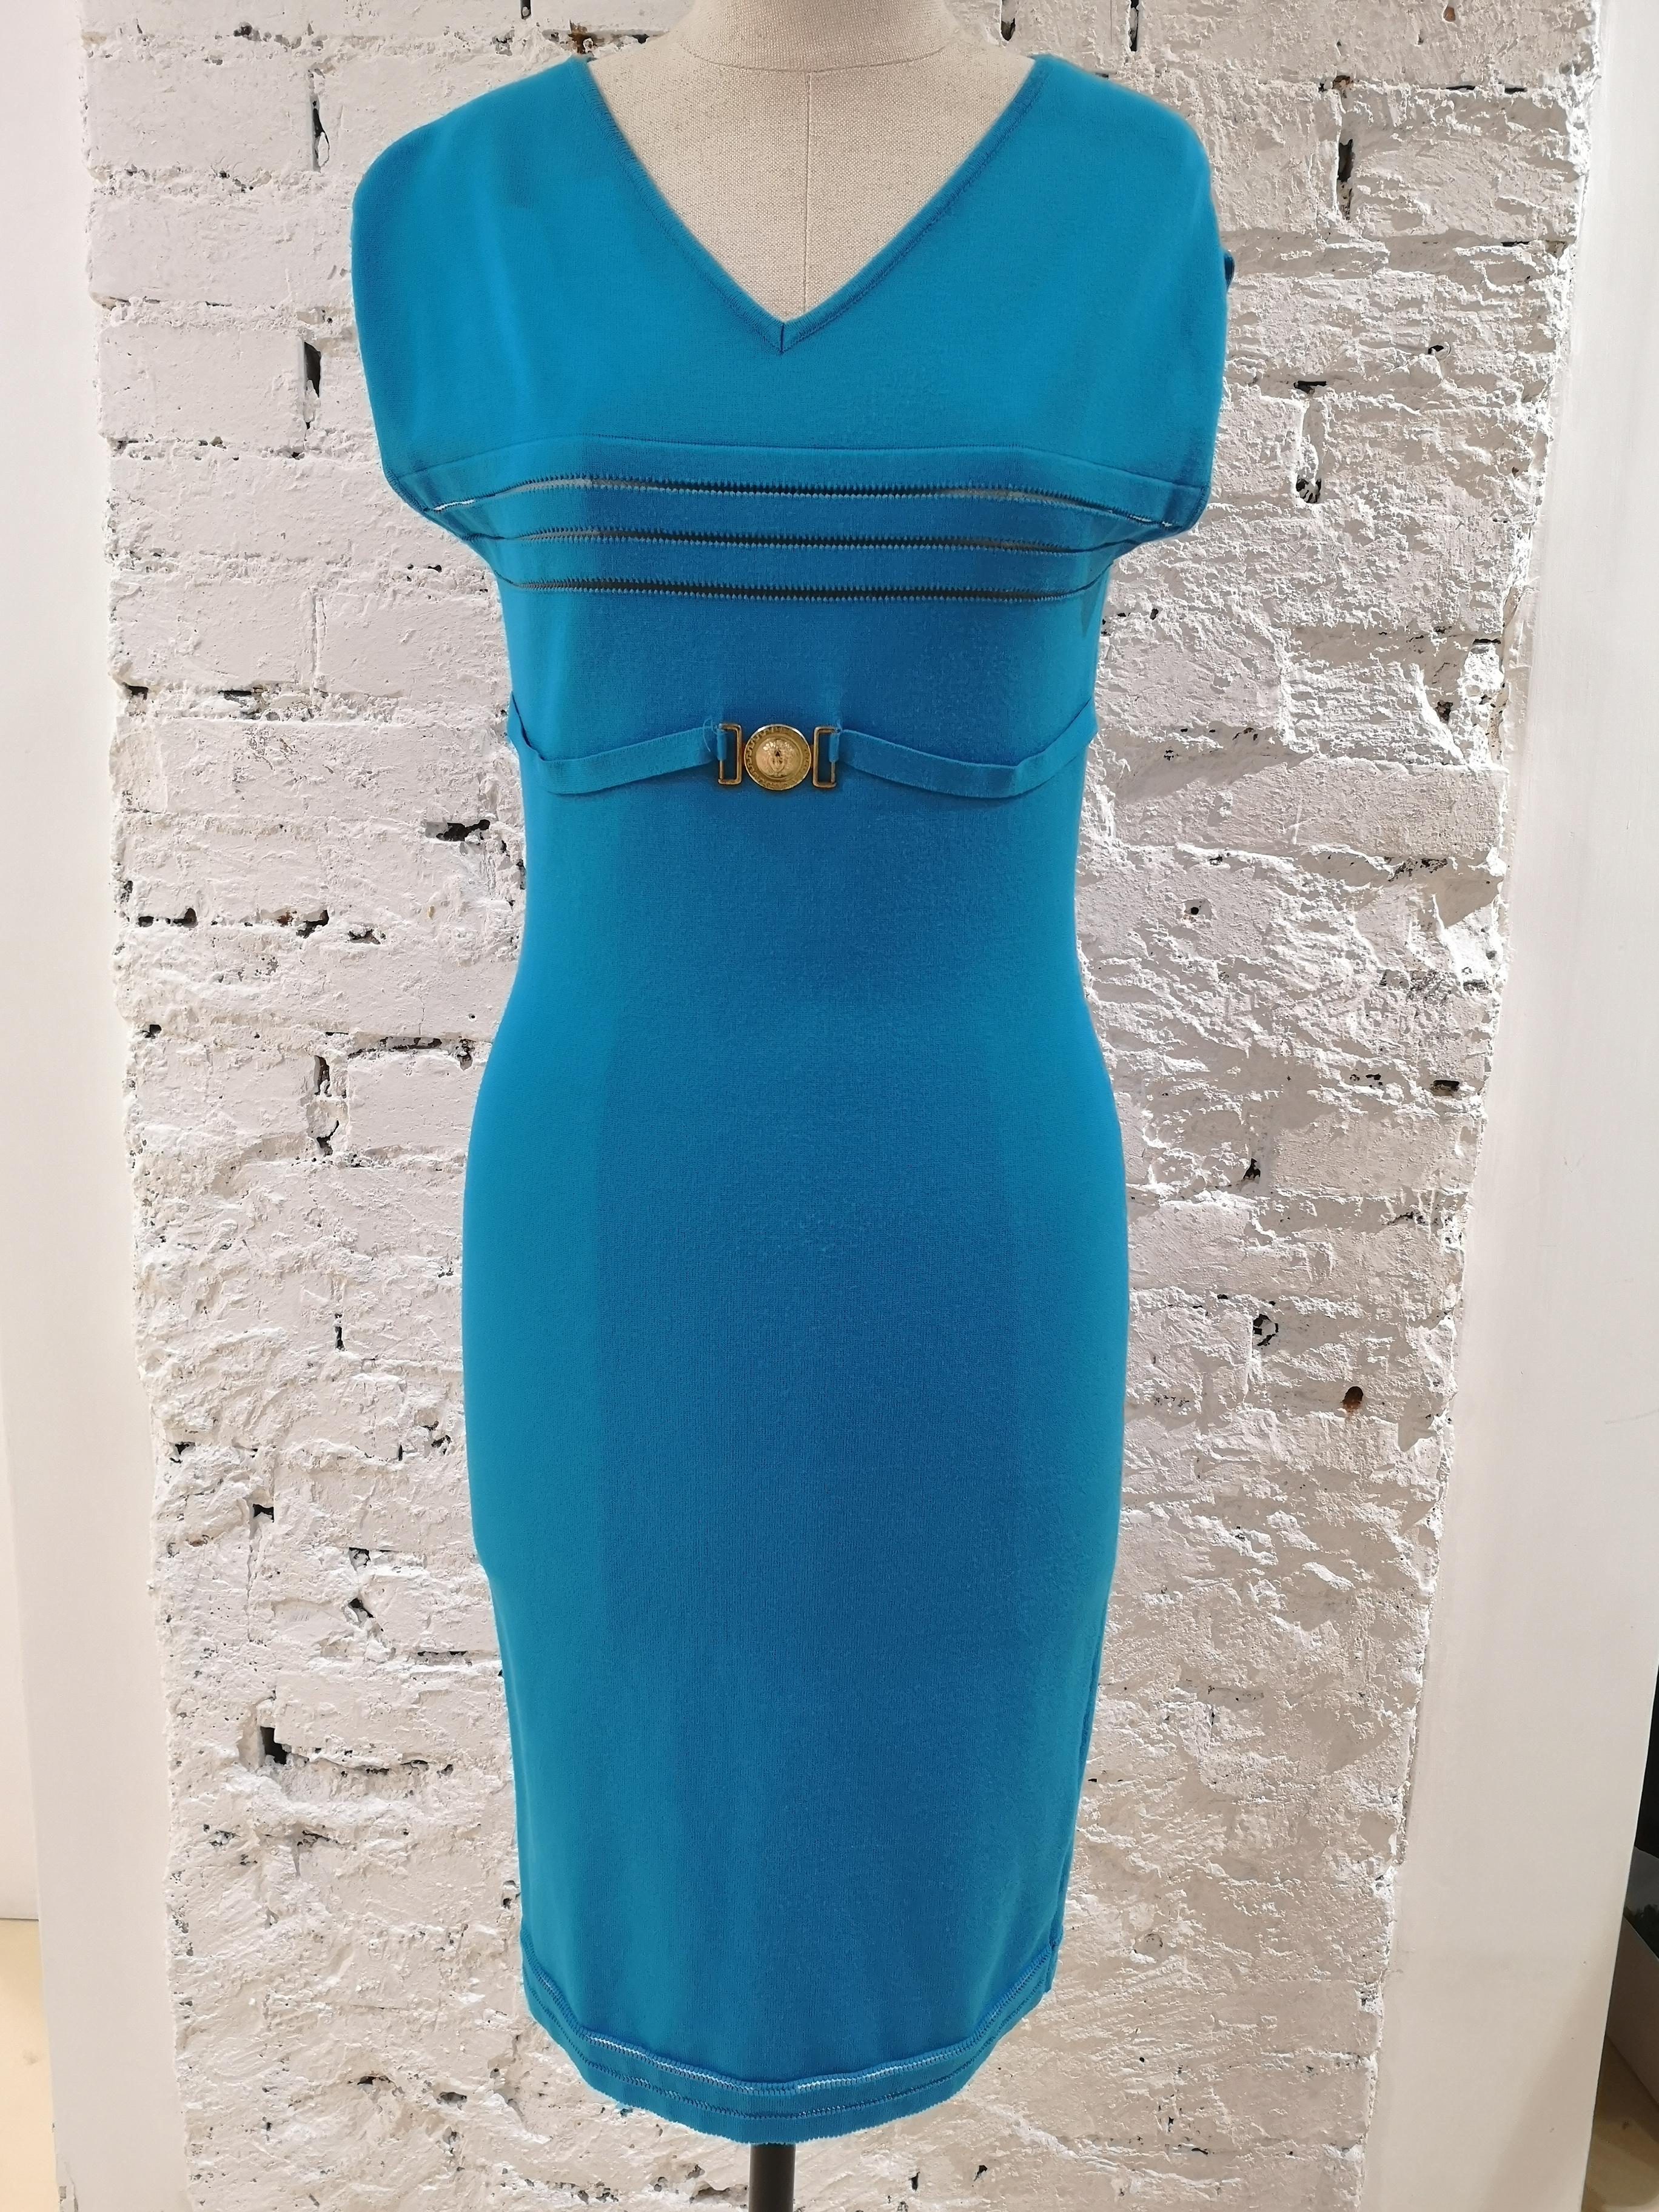 Versace Collecction Blue Dress NWOT 5